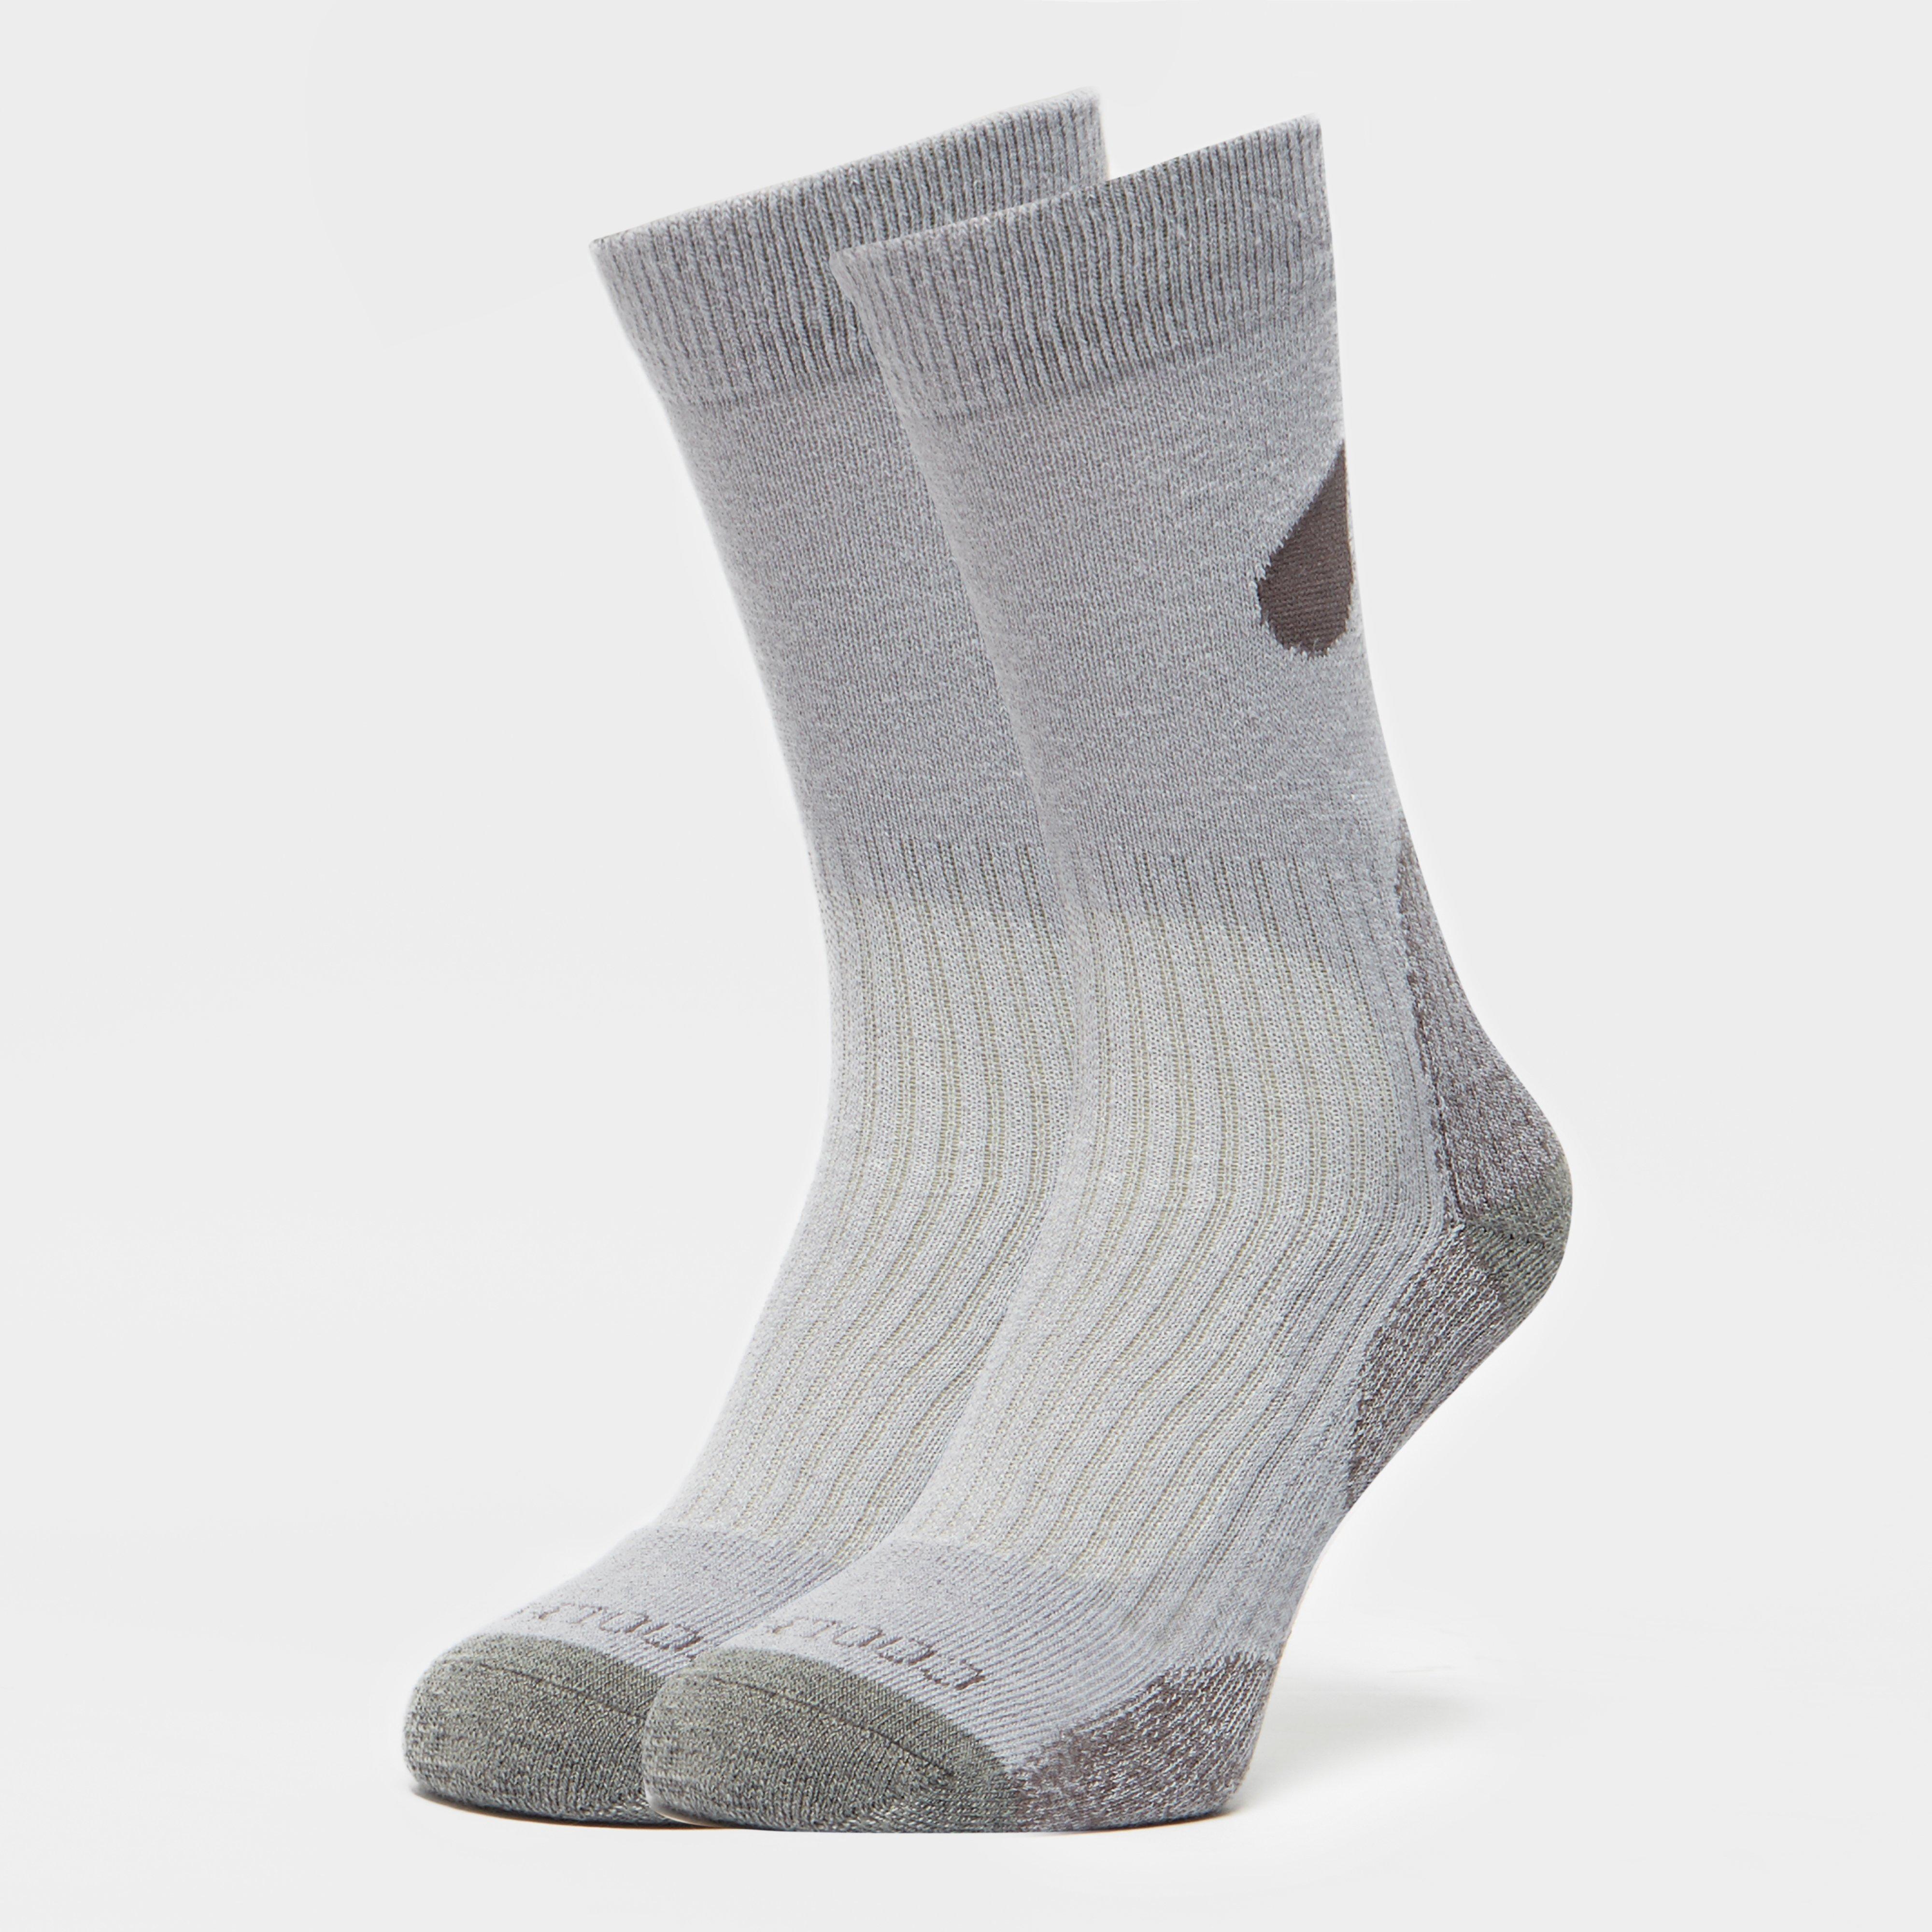 Peter Storm Lightweight Outdoor Socks - Grey/lgy  Grey/lgy